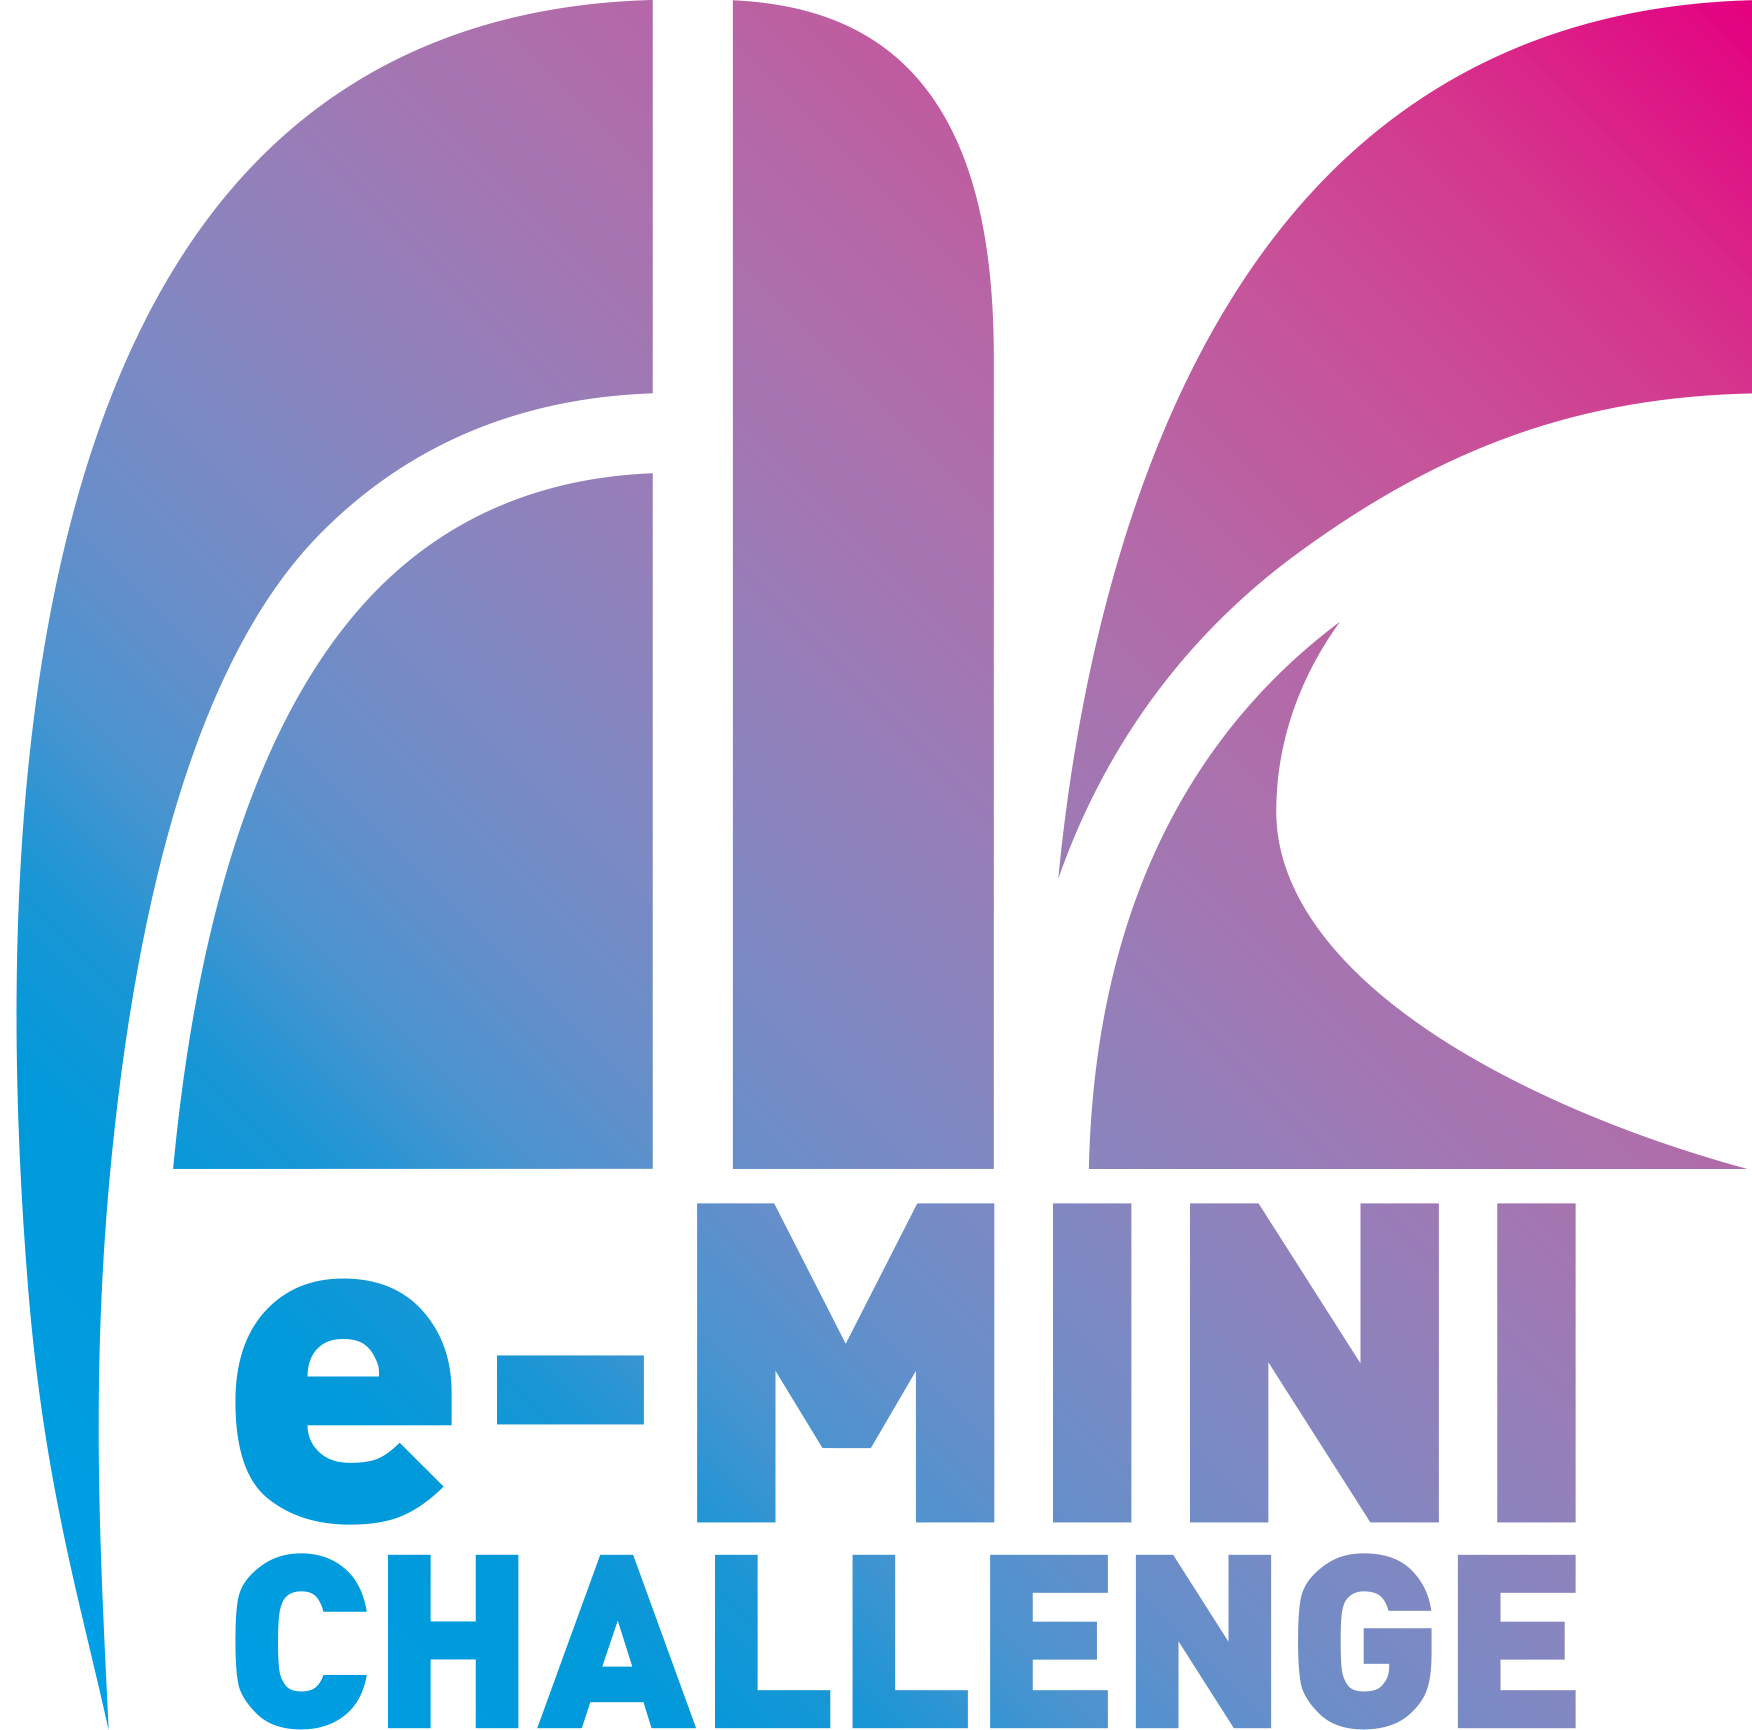 e-MINI CHALLENGE® 2020 2nd Season start!